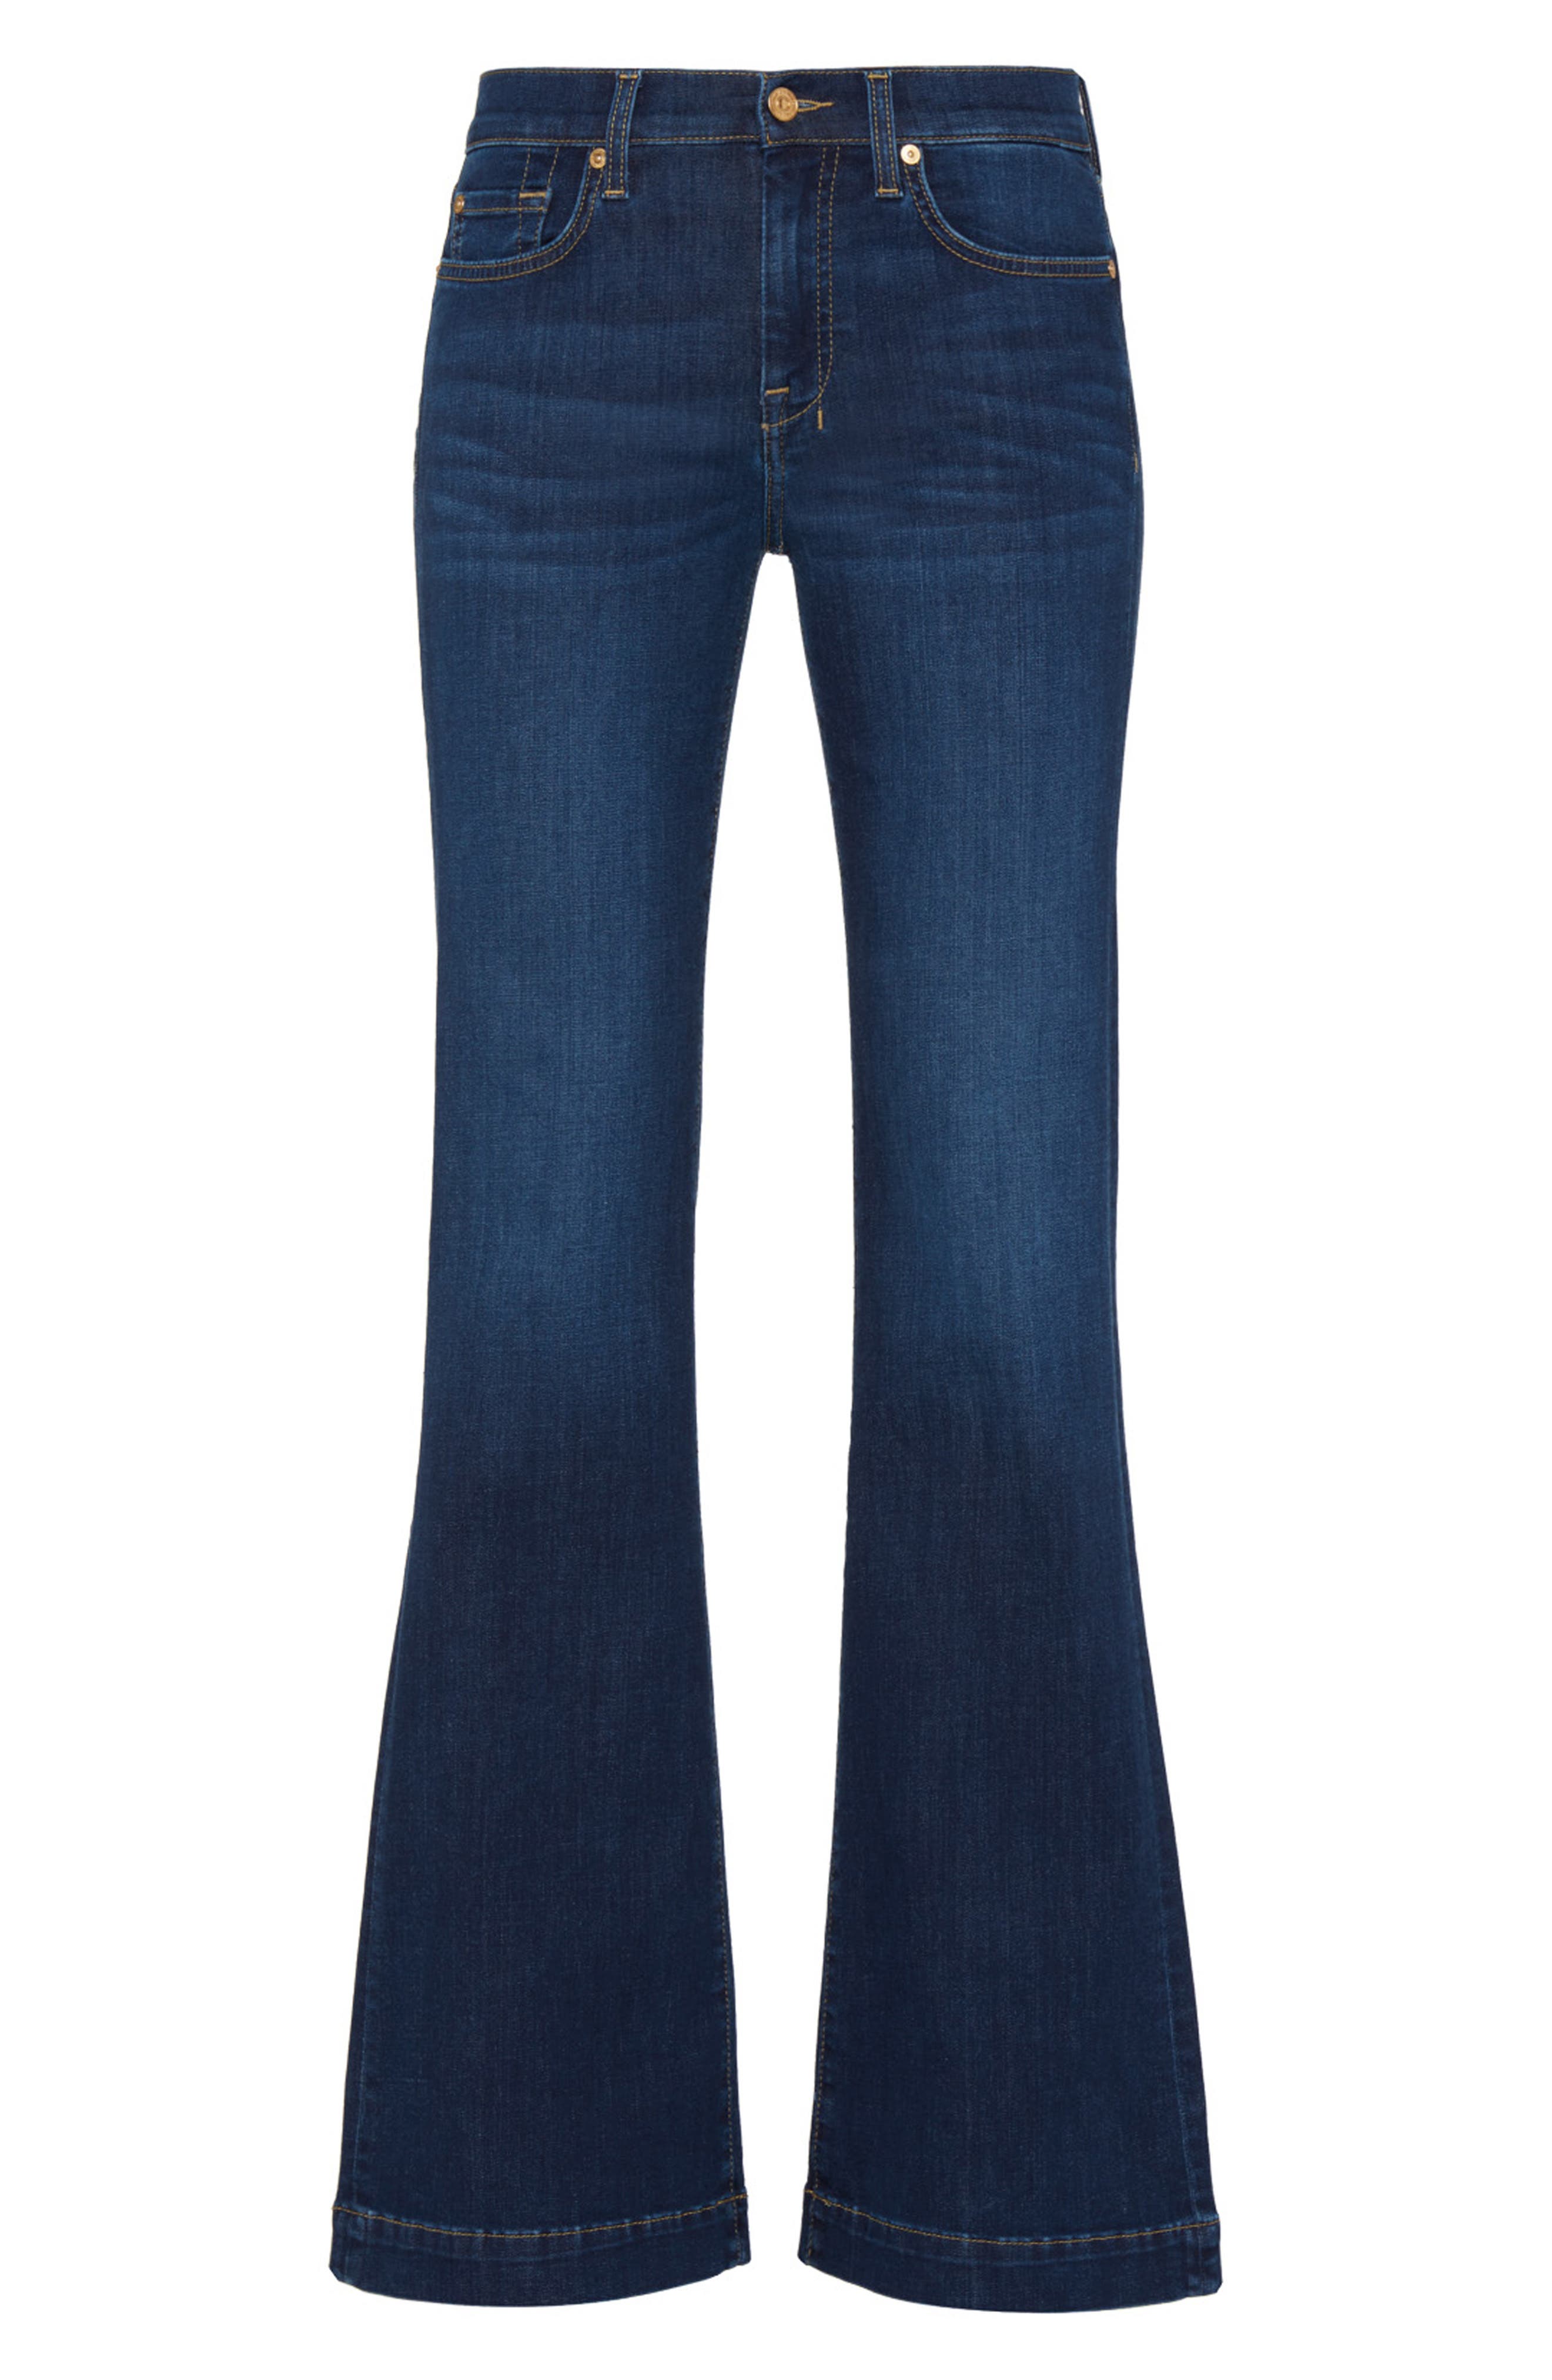 24m-Mid Denim Blue Mädchen Designer Jeans 7 for all mankind 